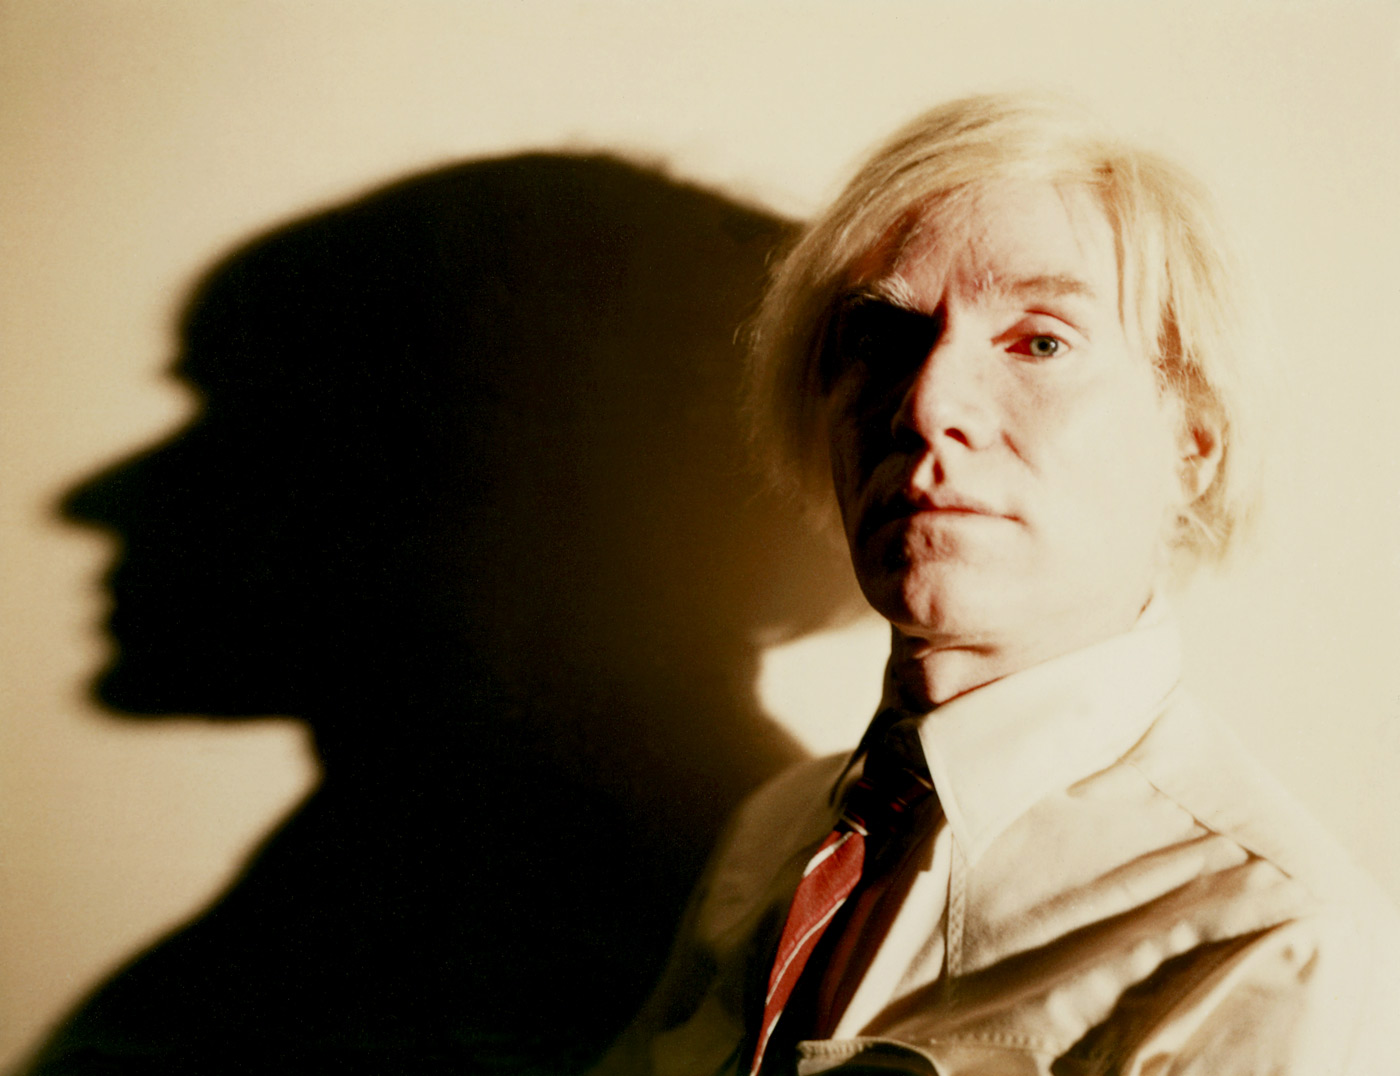 Andy Warhol (American, 1928-1987) 'Self-Portrait' 1981